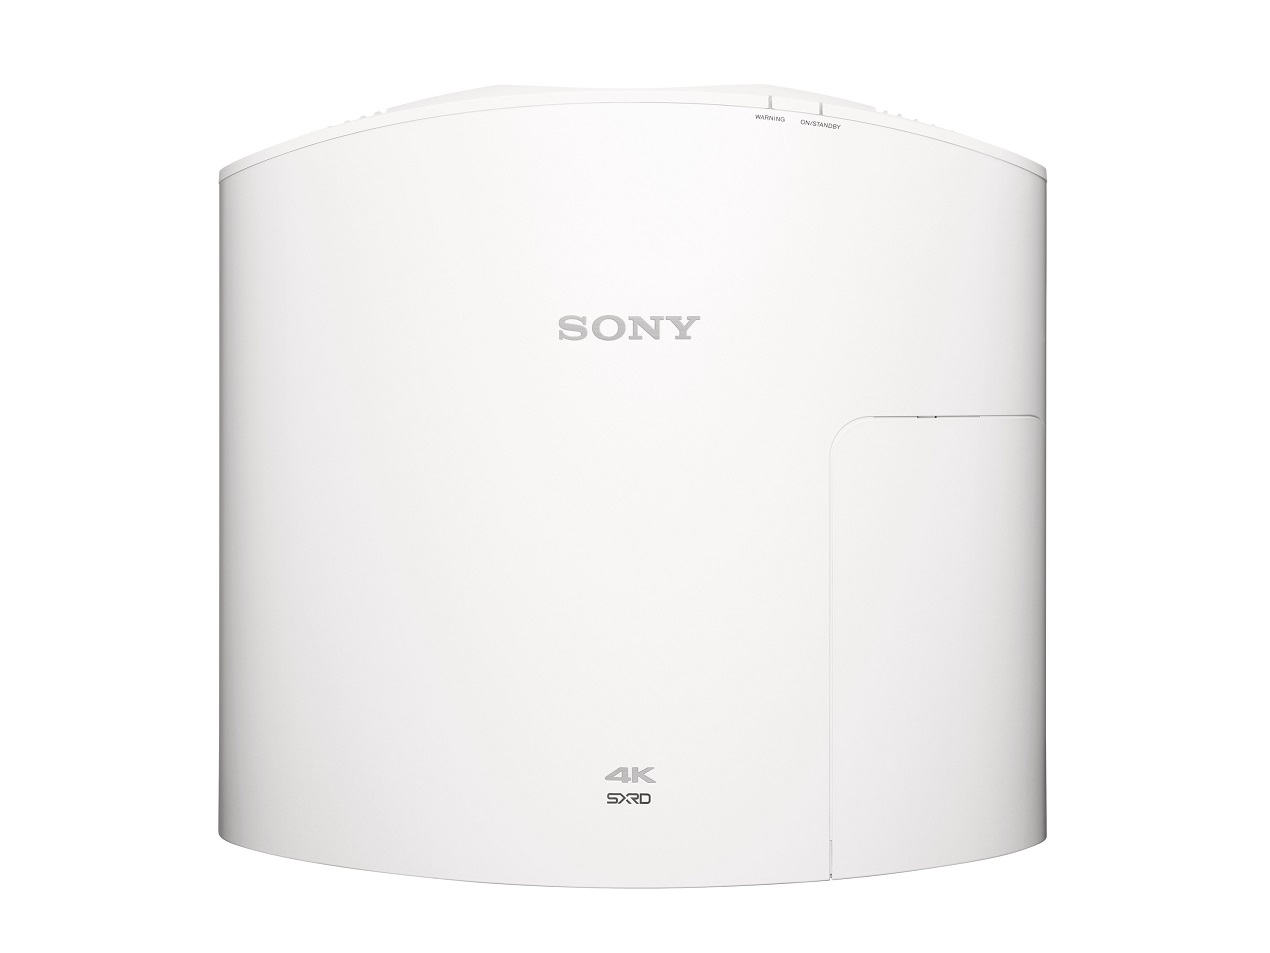 Sony VPL-VW270/W white